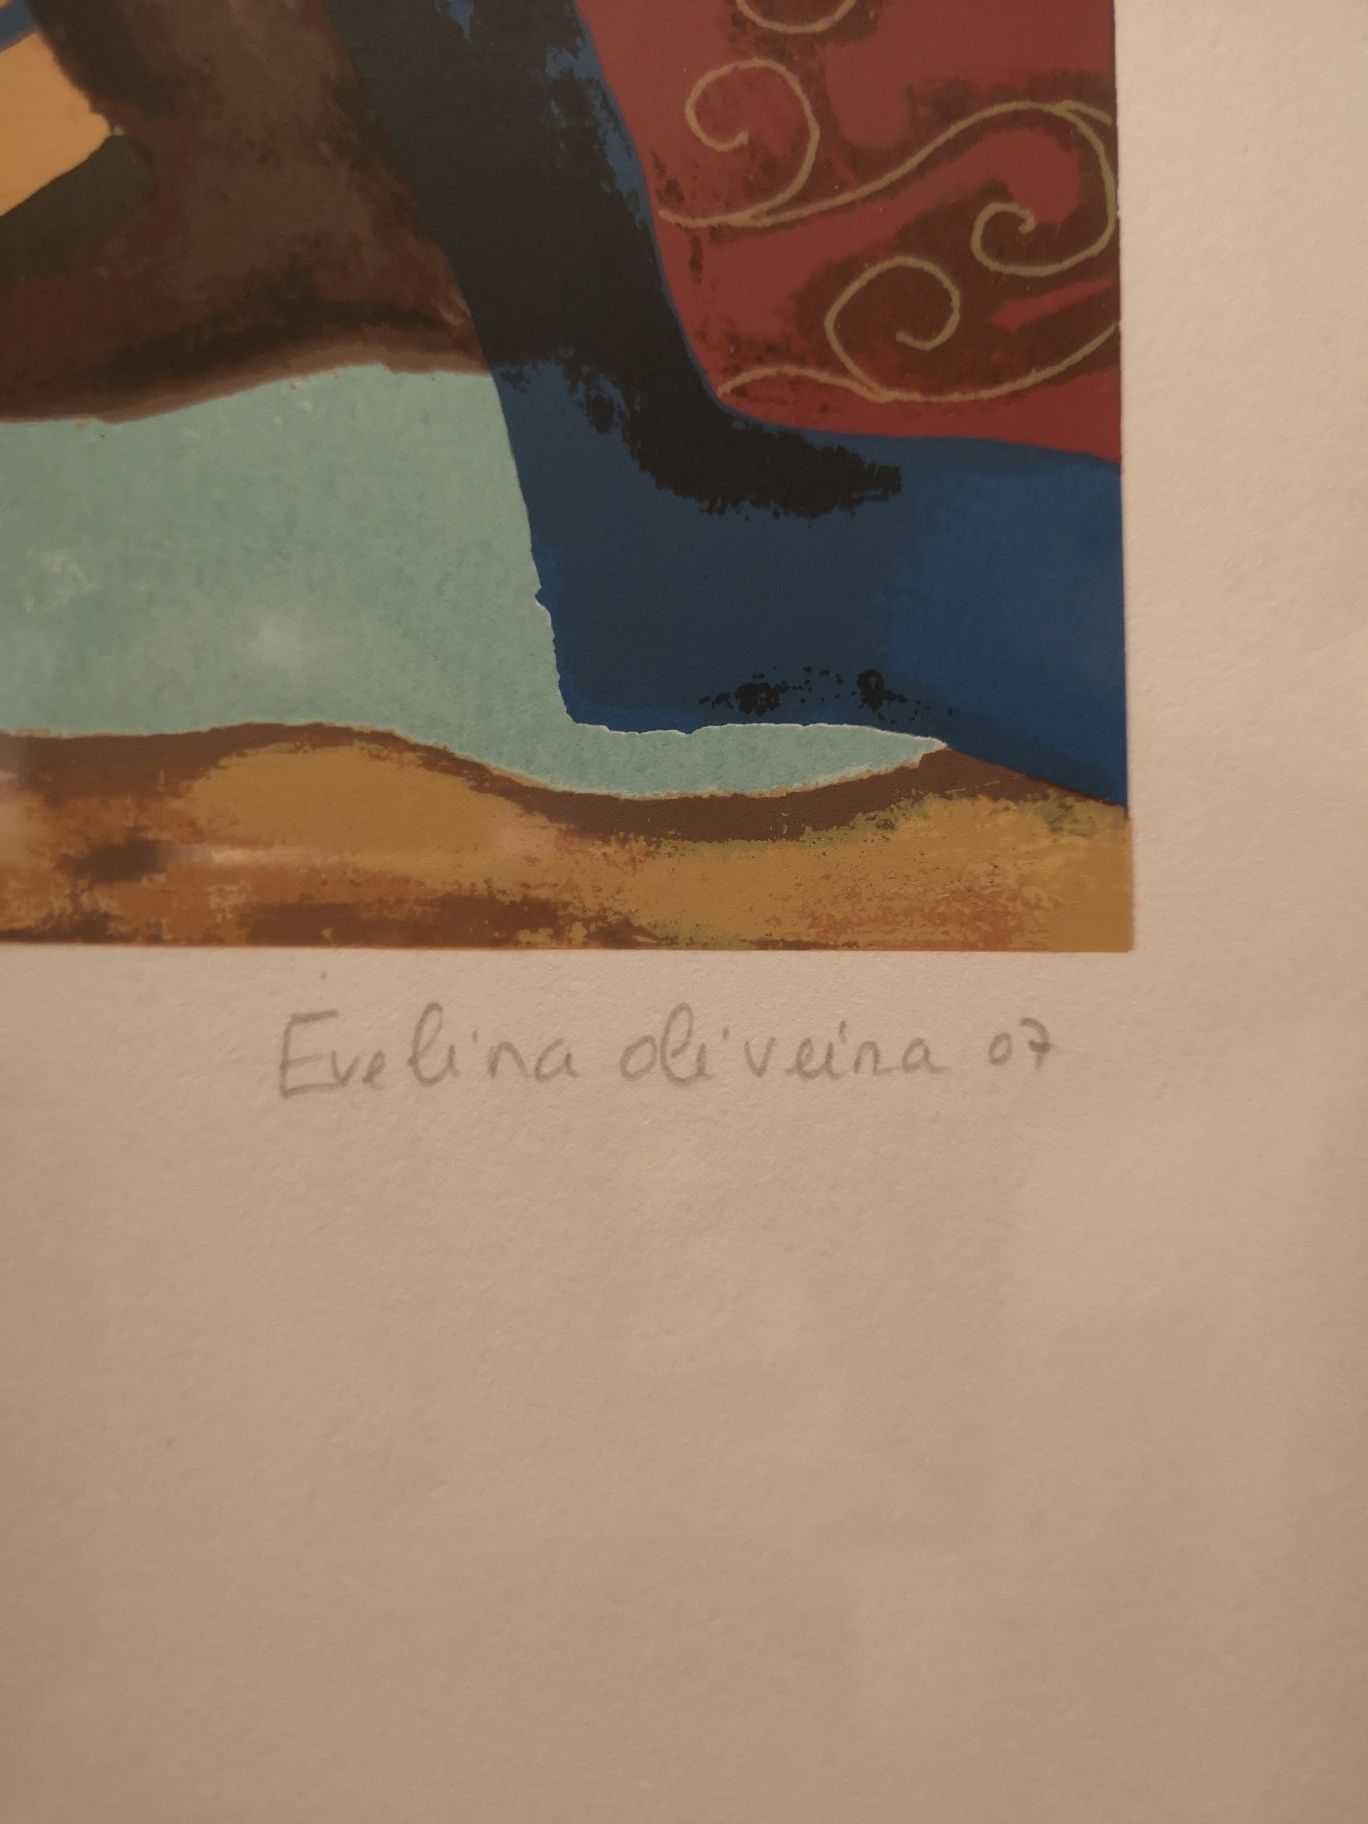 Serigrafia Evelina Oliveira - exclusiva e numerada